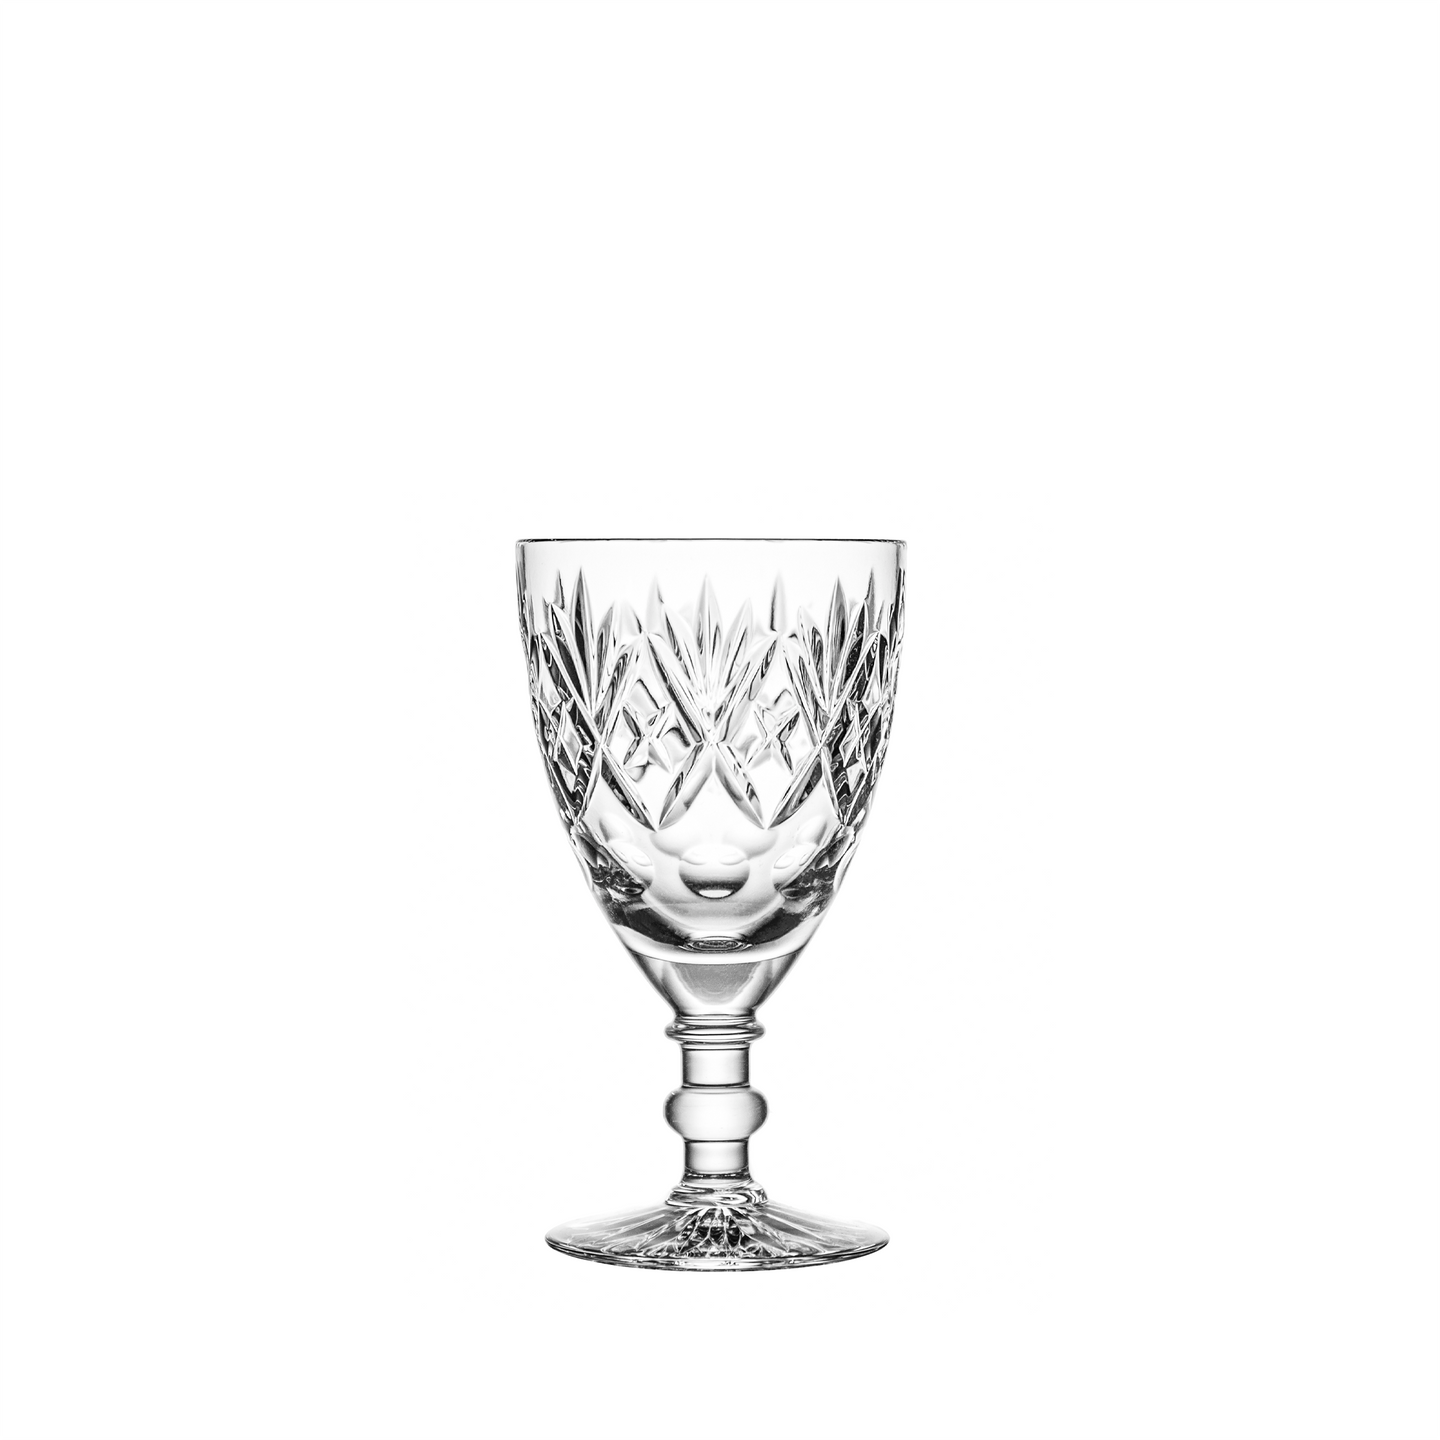 Blaise Small Wine Glass